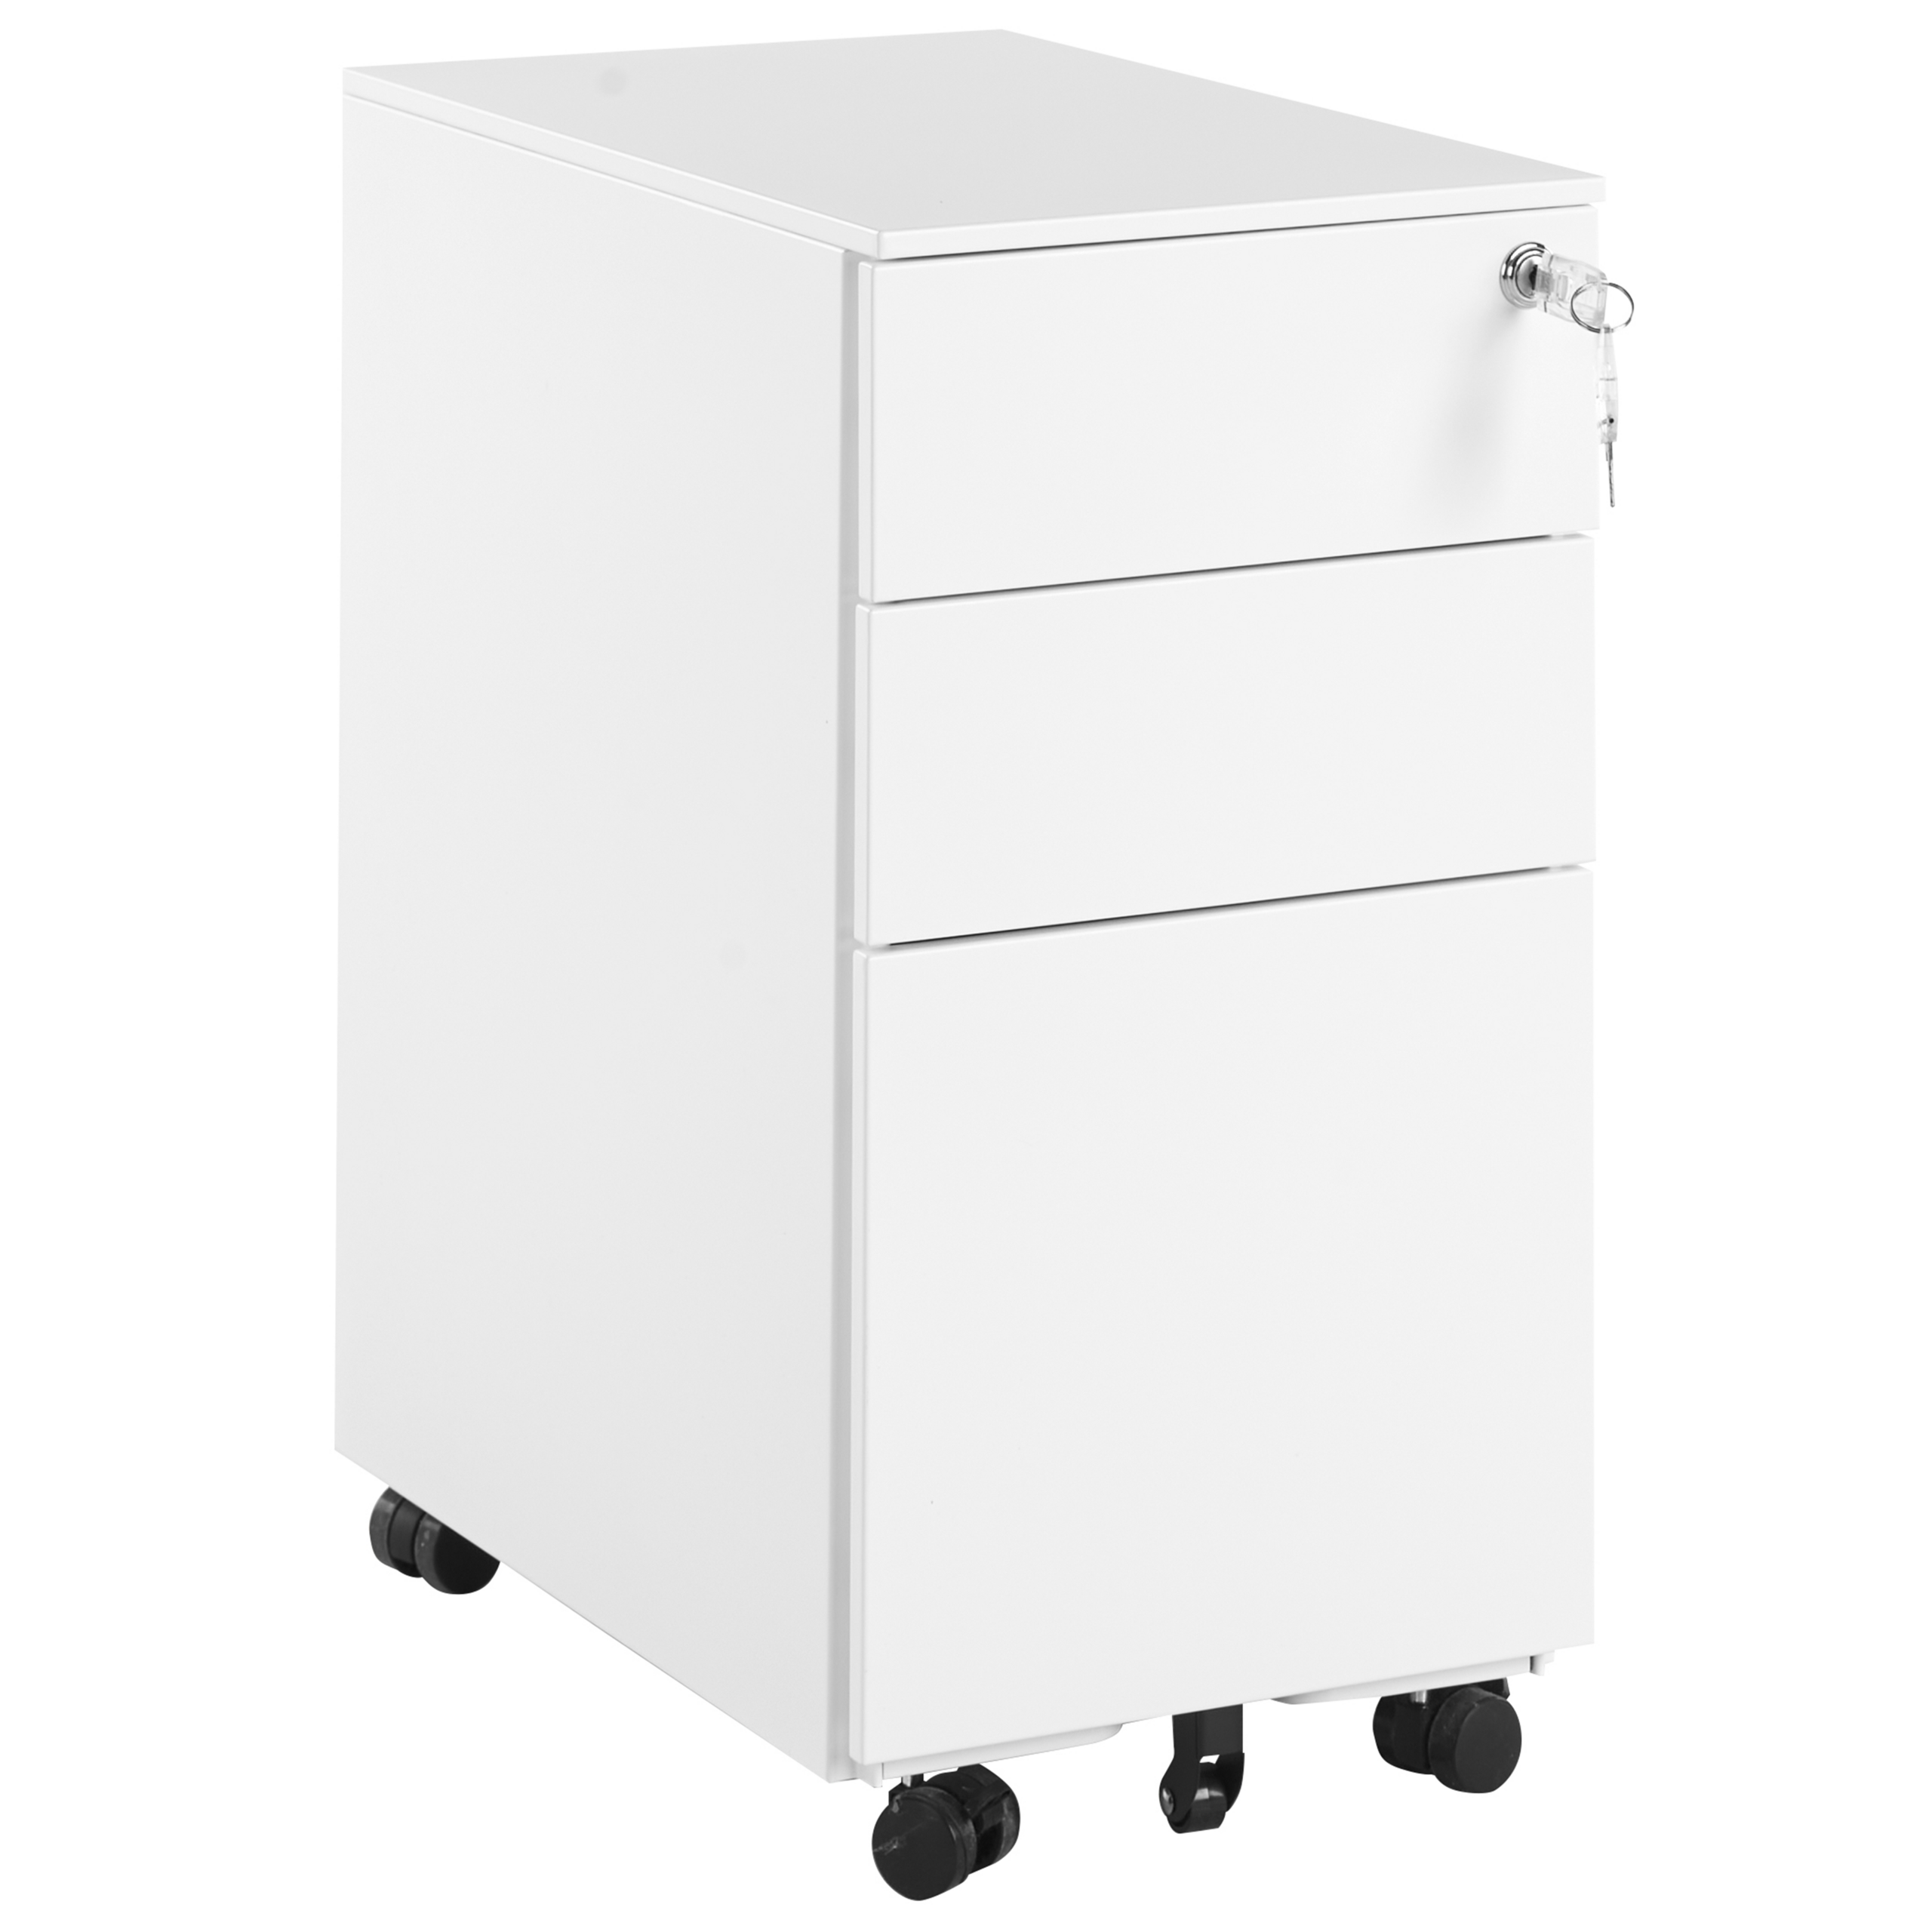 Beliani Storage Cabinet White Metal with 3 Drawers Key Lock Castors Industrial Modern Home Office Garage